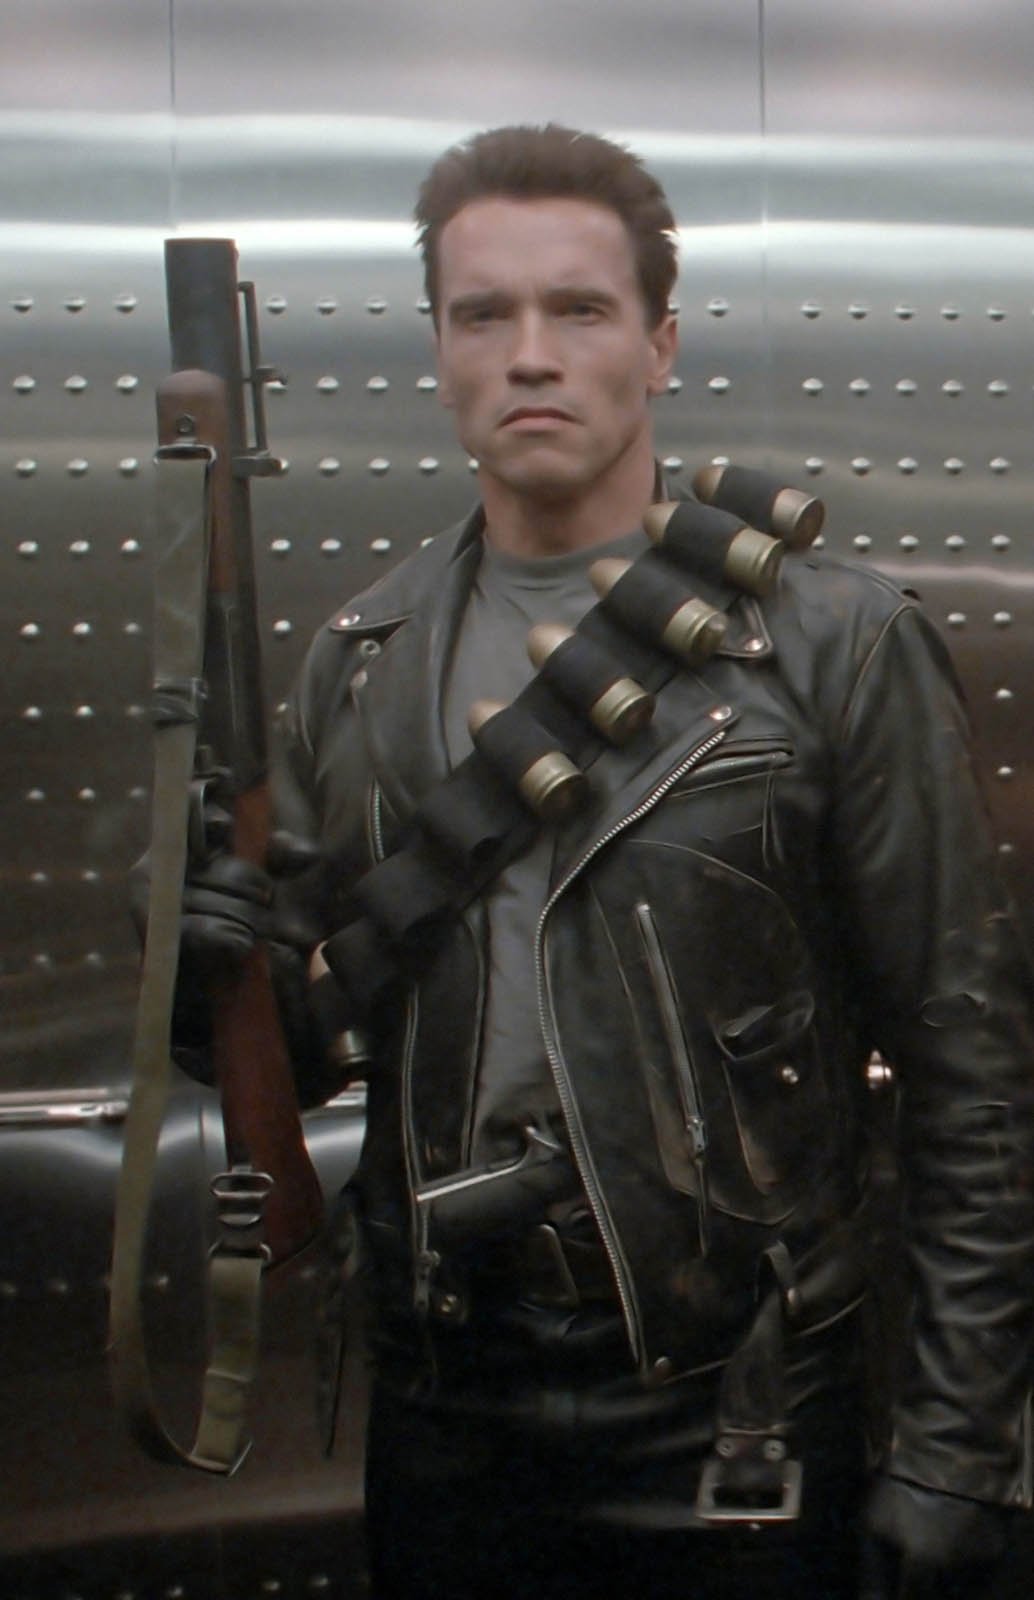 Arnold Schwarzenegger Terminator : Publican el aspecto de Arnold ...